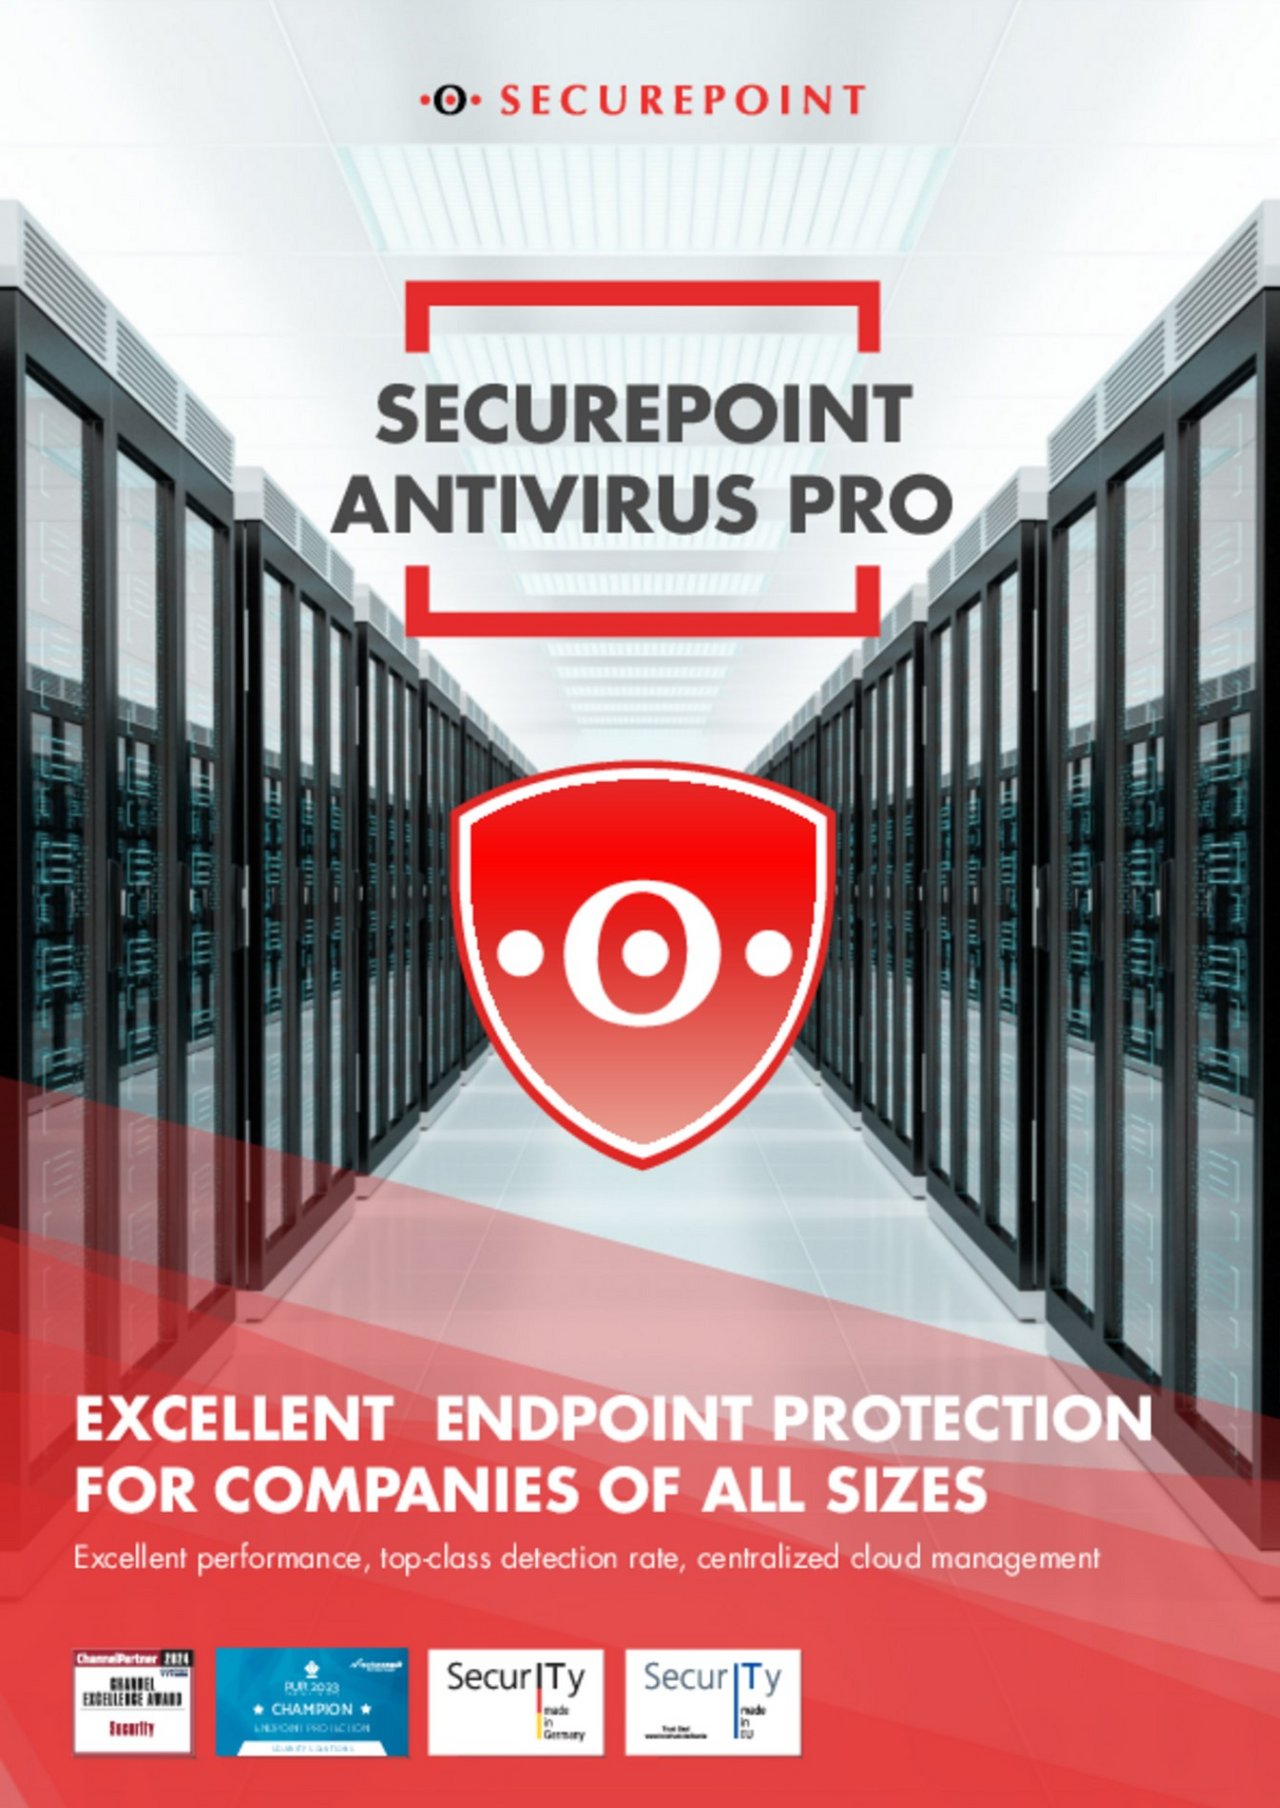 Titel from the Securepoint Antivirus Pro prospekt